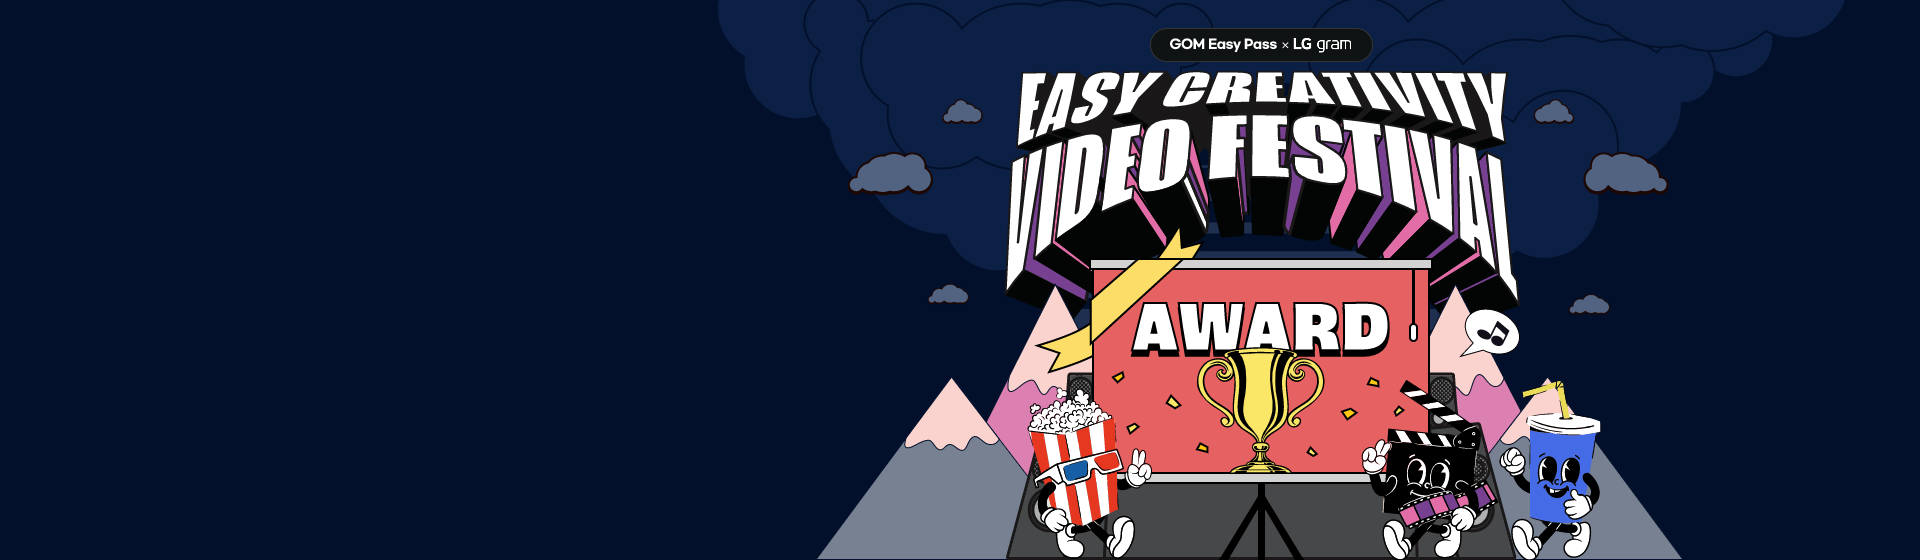 GOM Easy Pass X LG gram EASY CREATIVITY VIDEO FESTIVAL AWARD